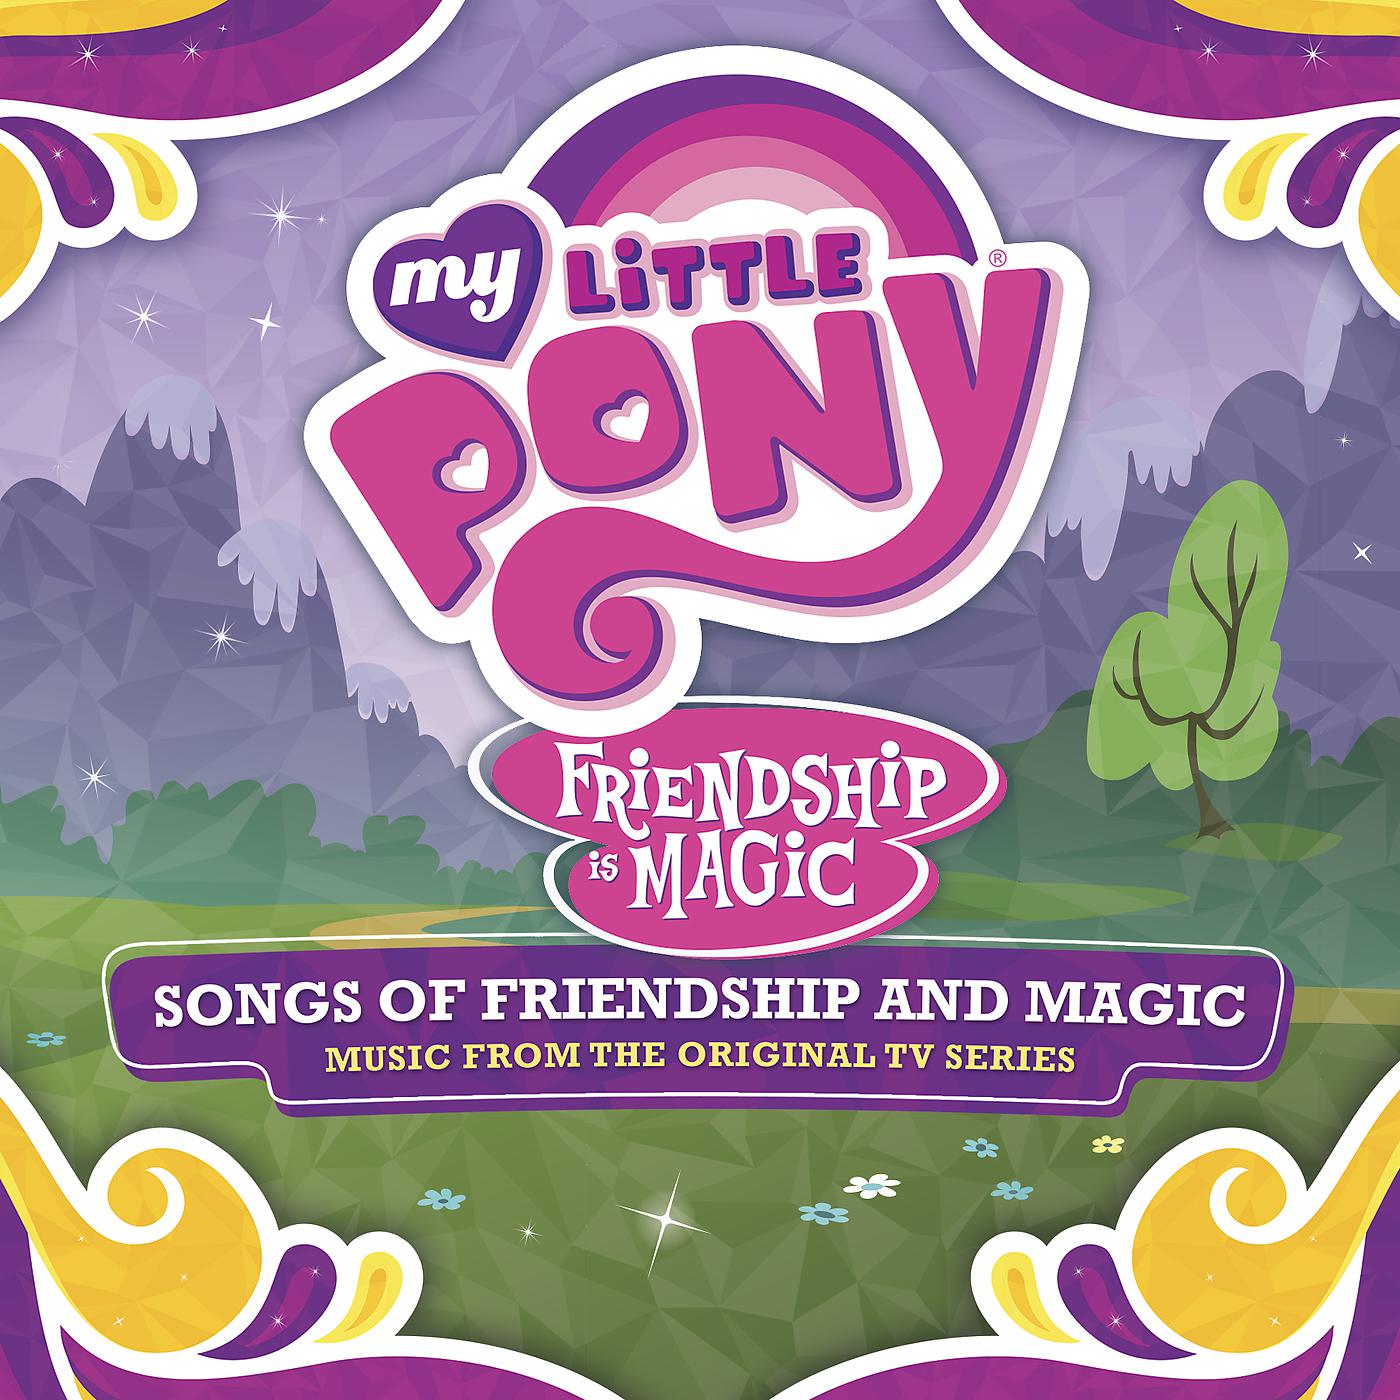 Музыка pony. Friendship Magic. Френдшип из Мэджик. My little Pony песня. Songs of Friendship and Magic Music.